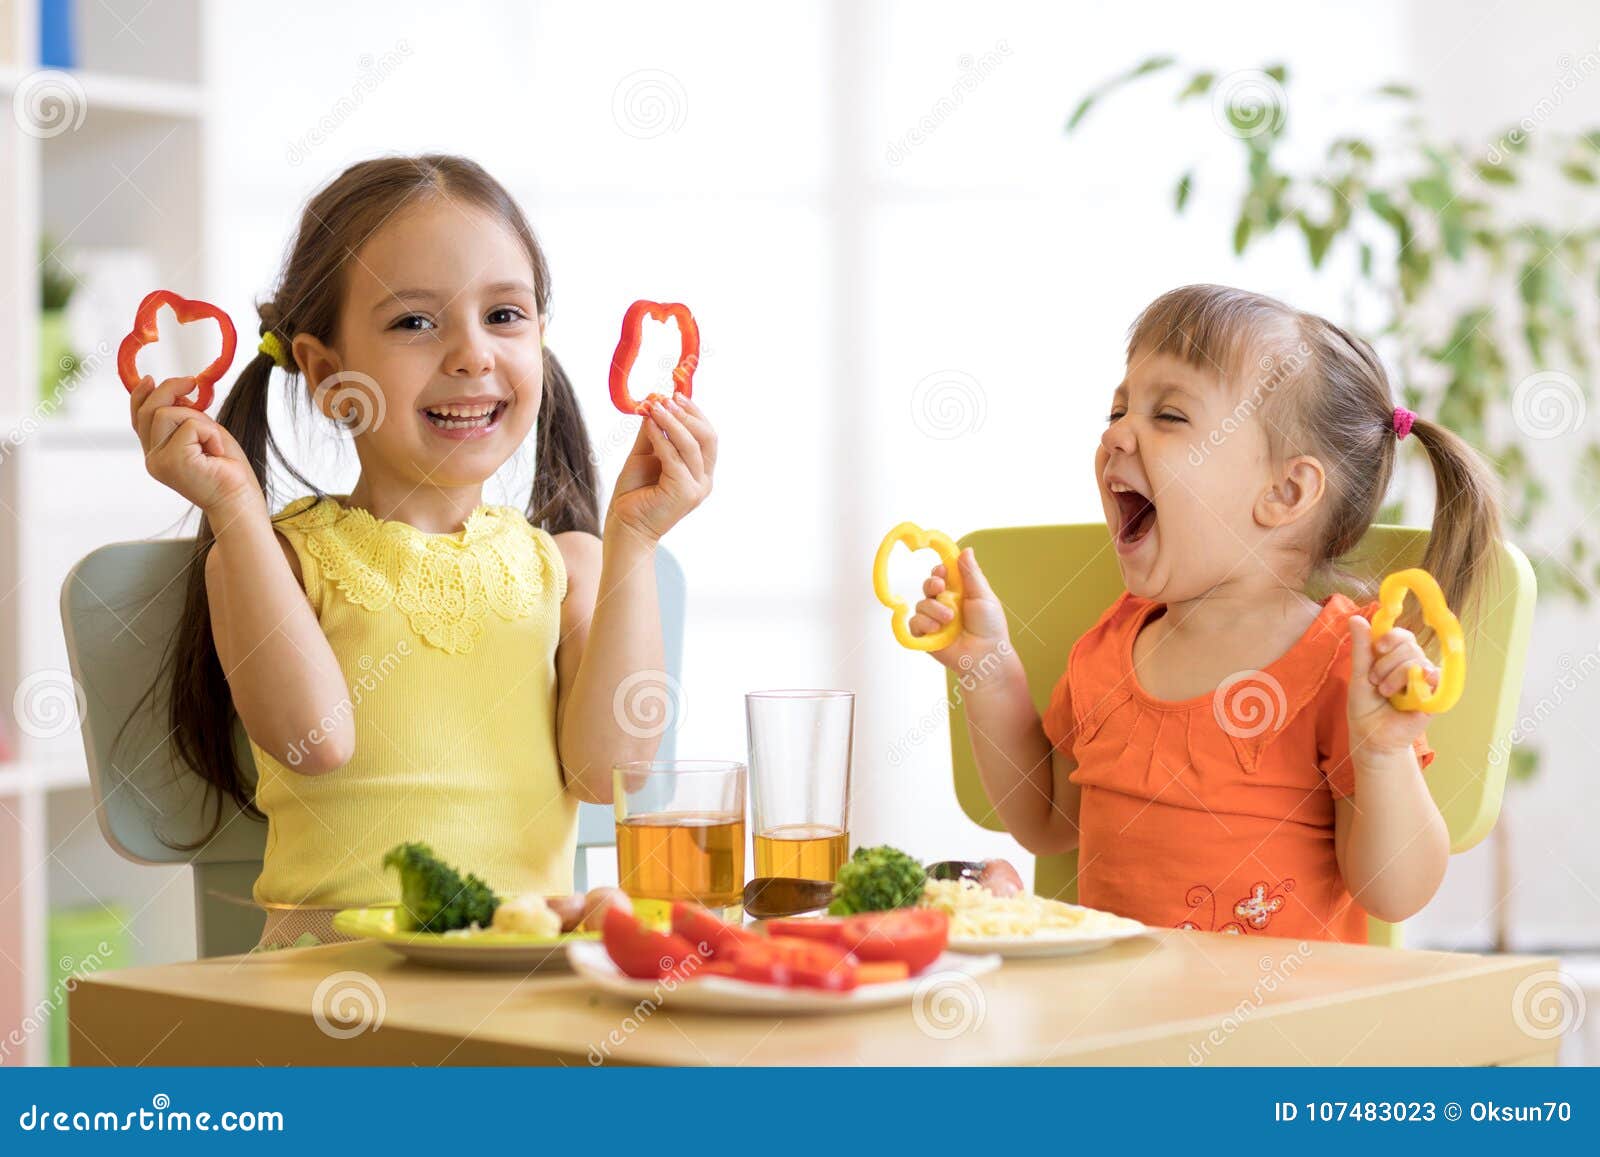 funny children girls eating healthy food. kids lunch at home or kindergarten.